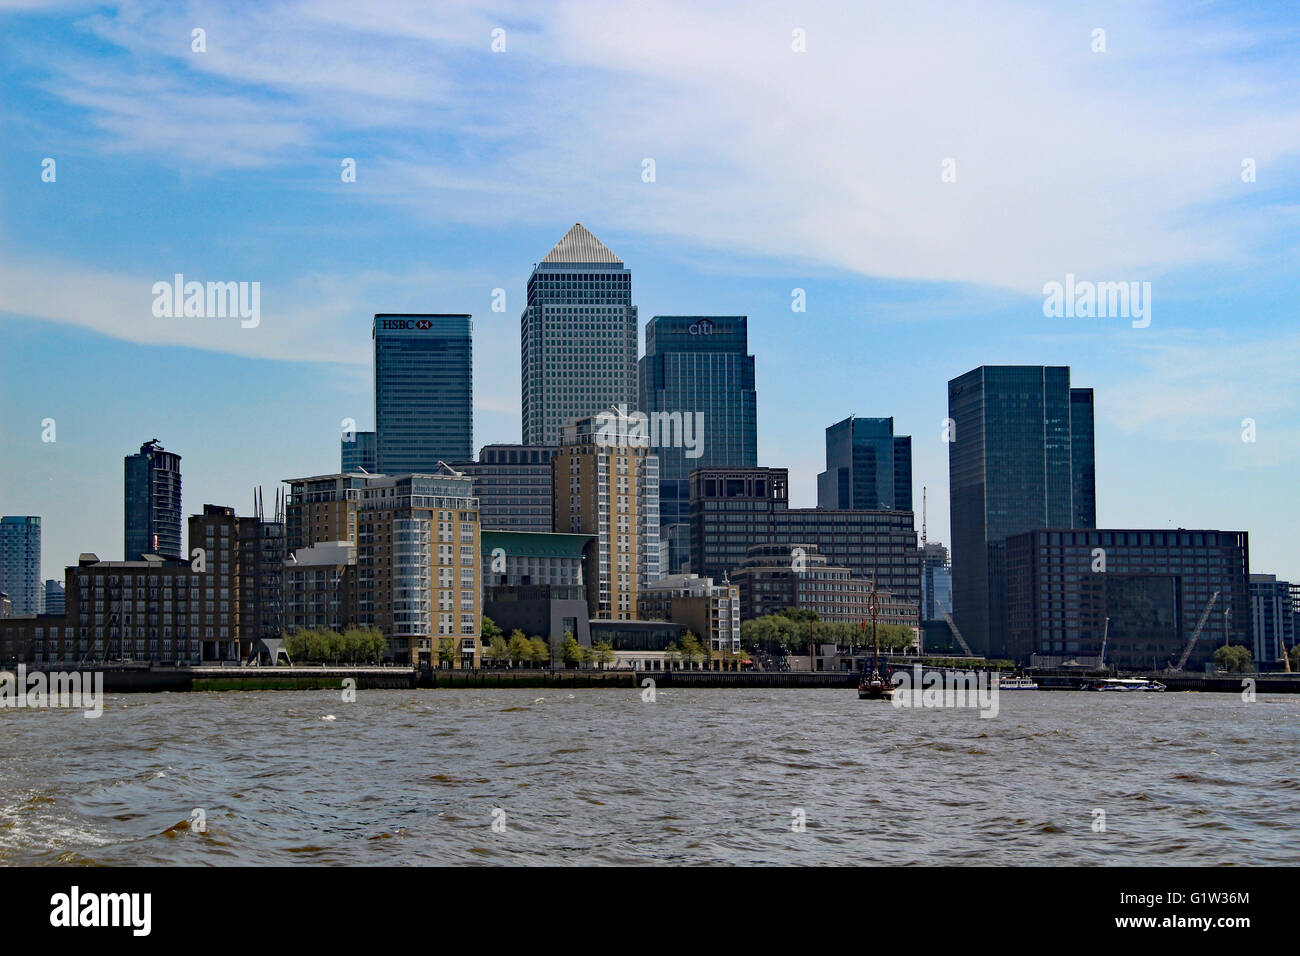 London Docklands Londra Skyline Fiume Tamigi CITI banca HSBC Canary Wharf Foto Stock